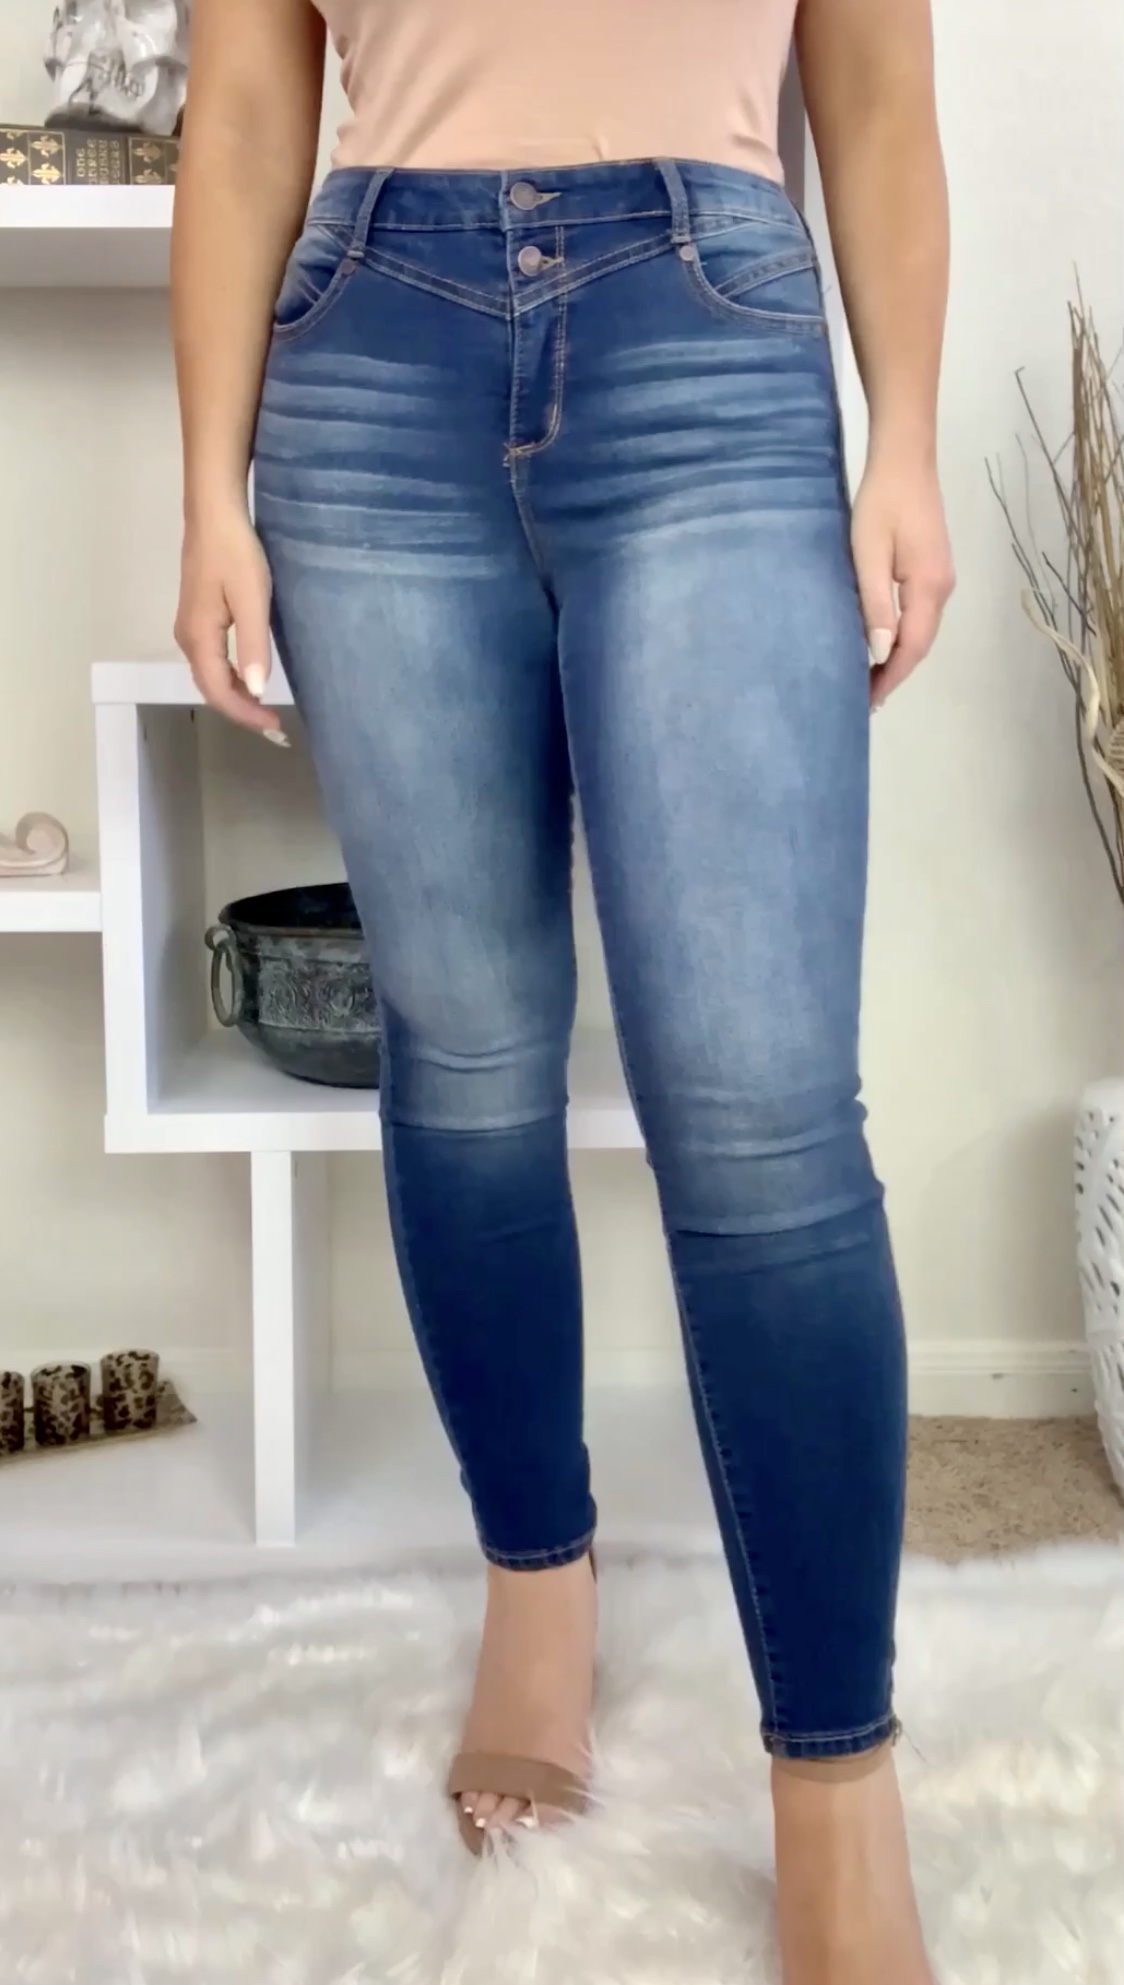 Sofia Vergara Walmart Denim Jeans Review - Dressed to Kill